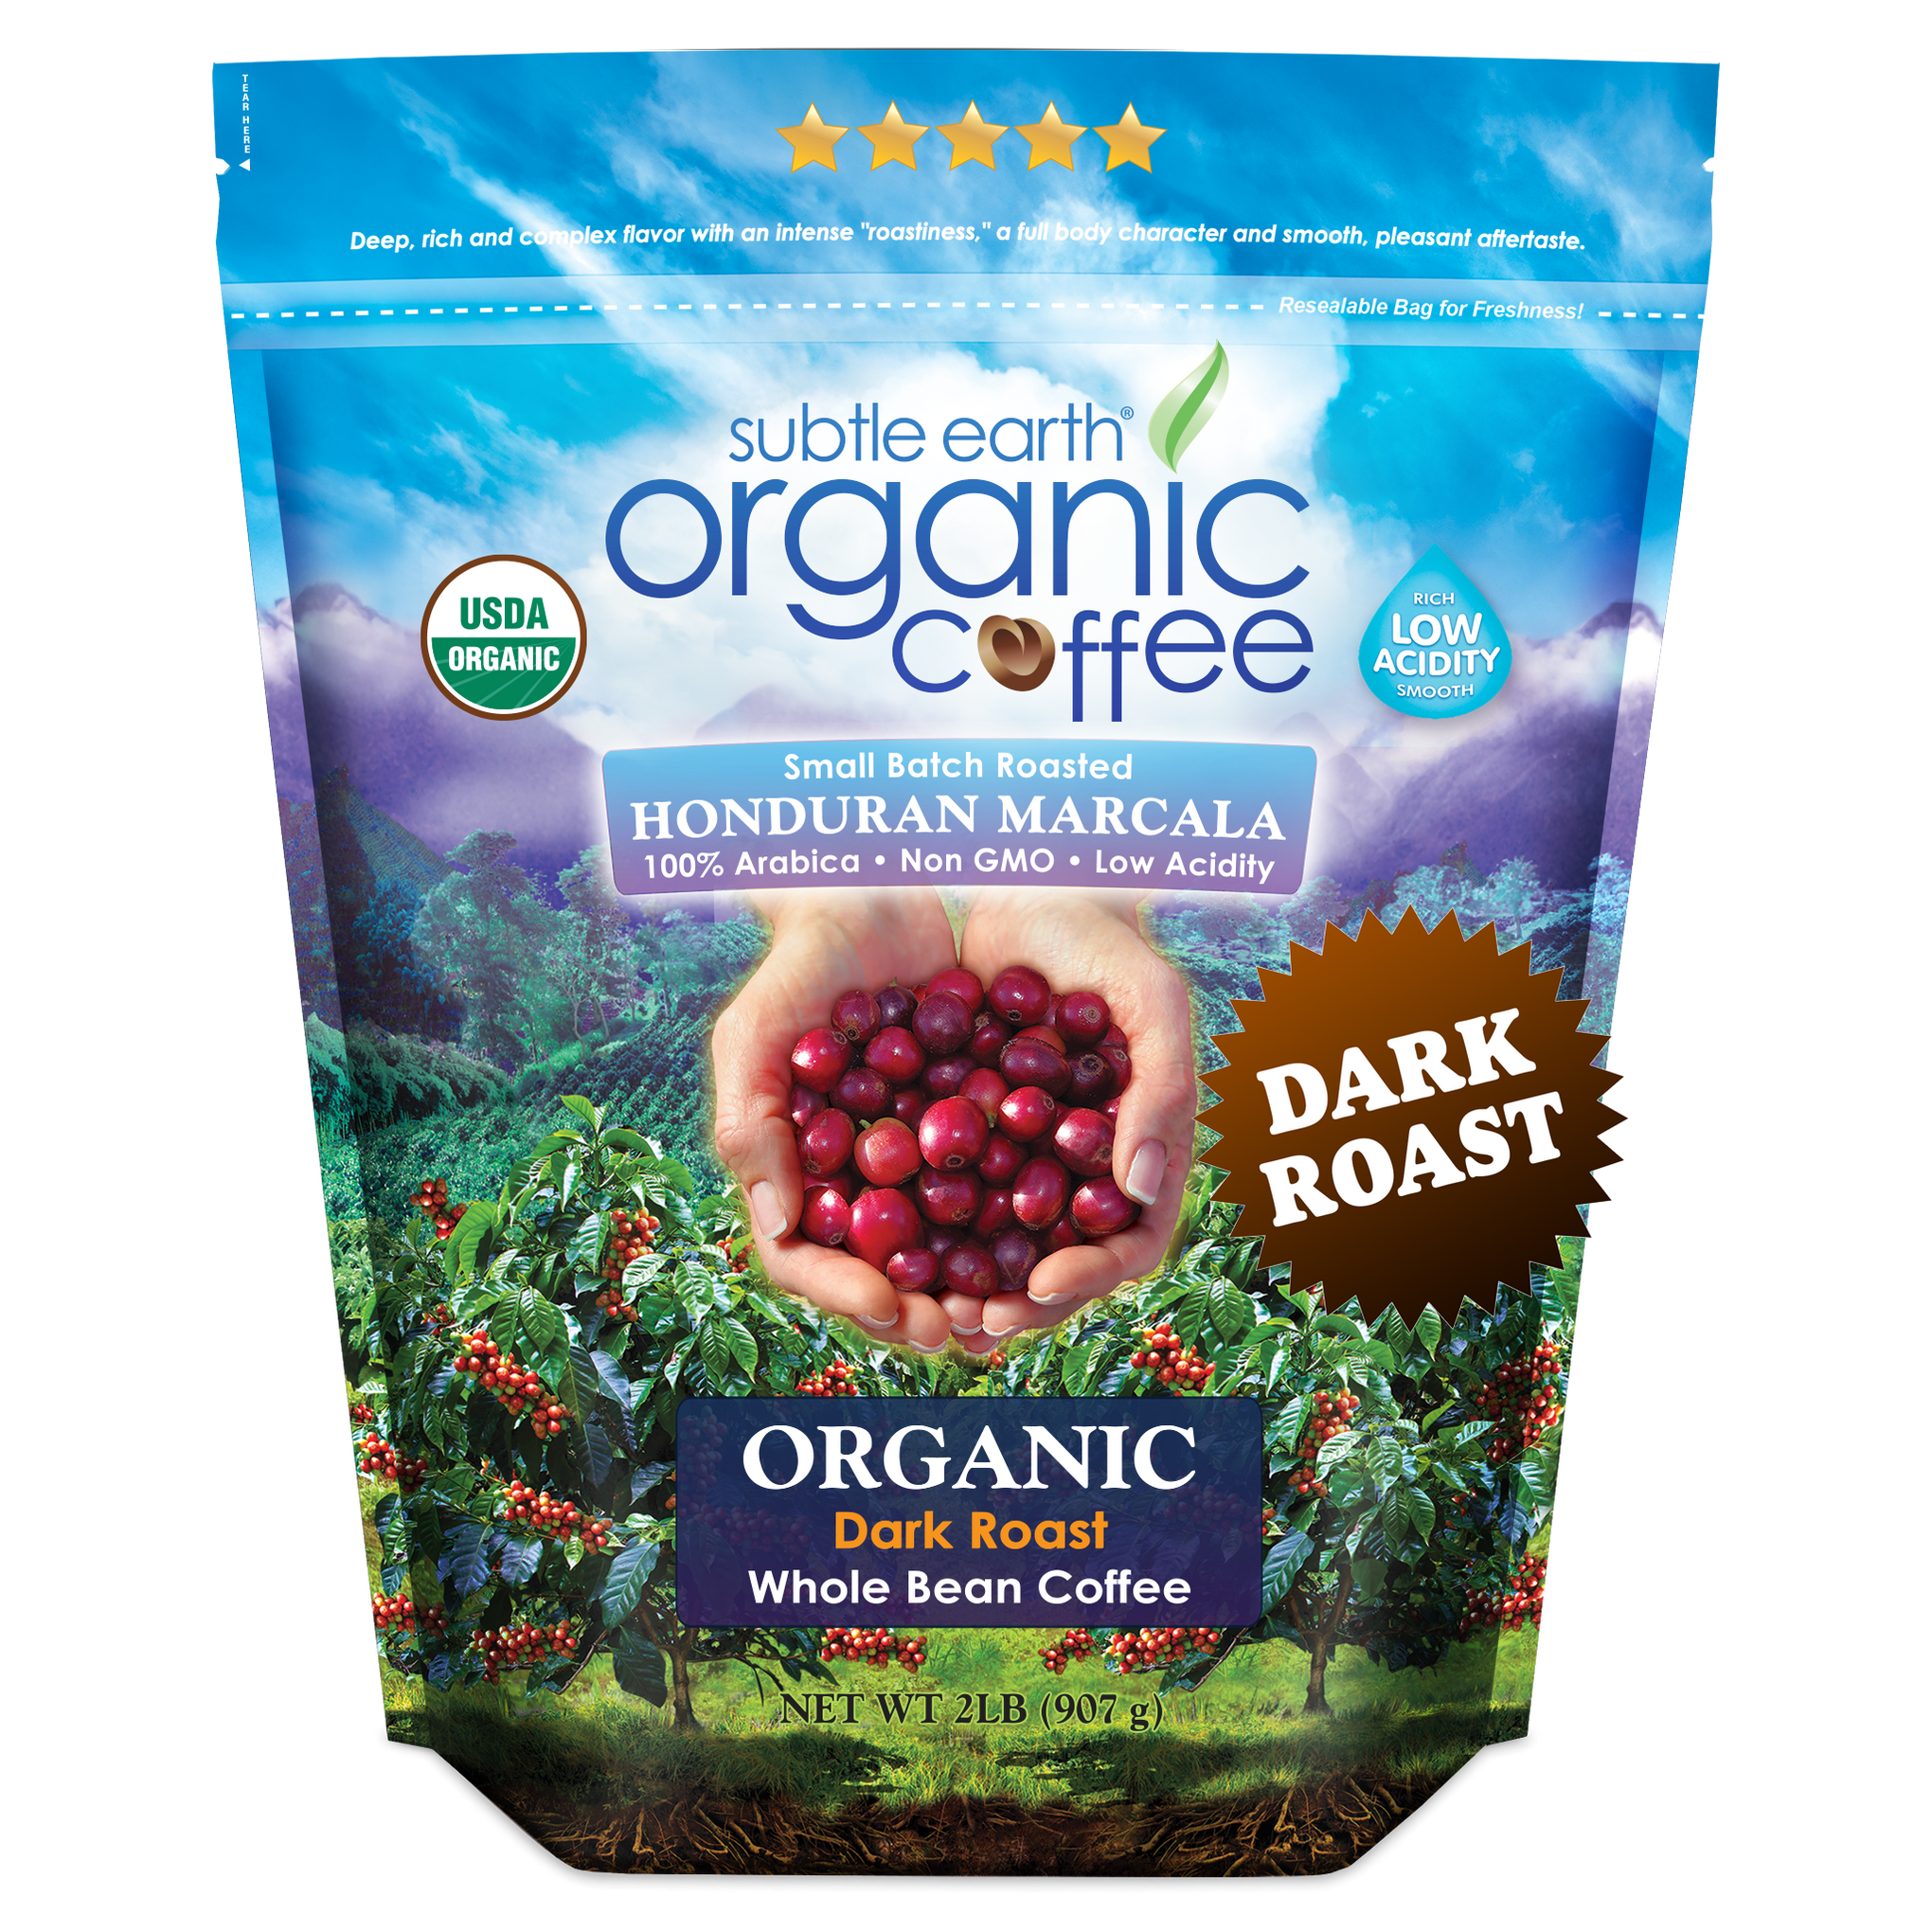 Subtle Earth Organic Dark Roast Coffee 2LB Bag hide